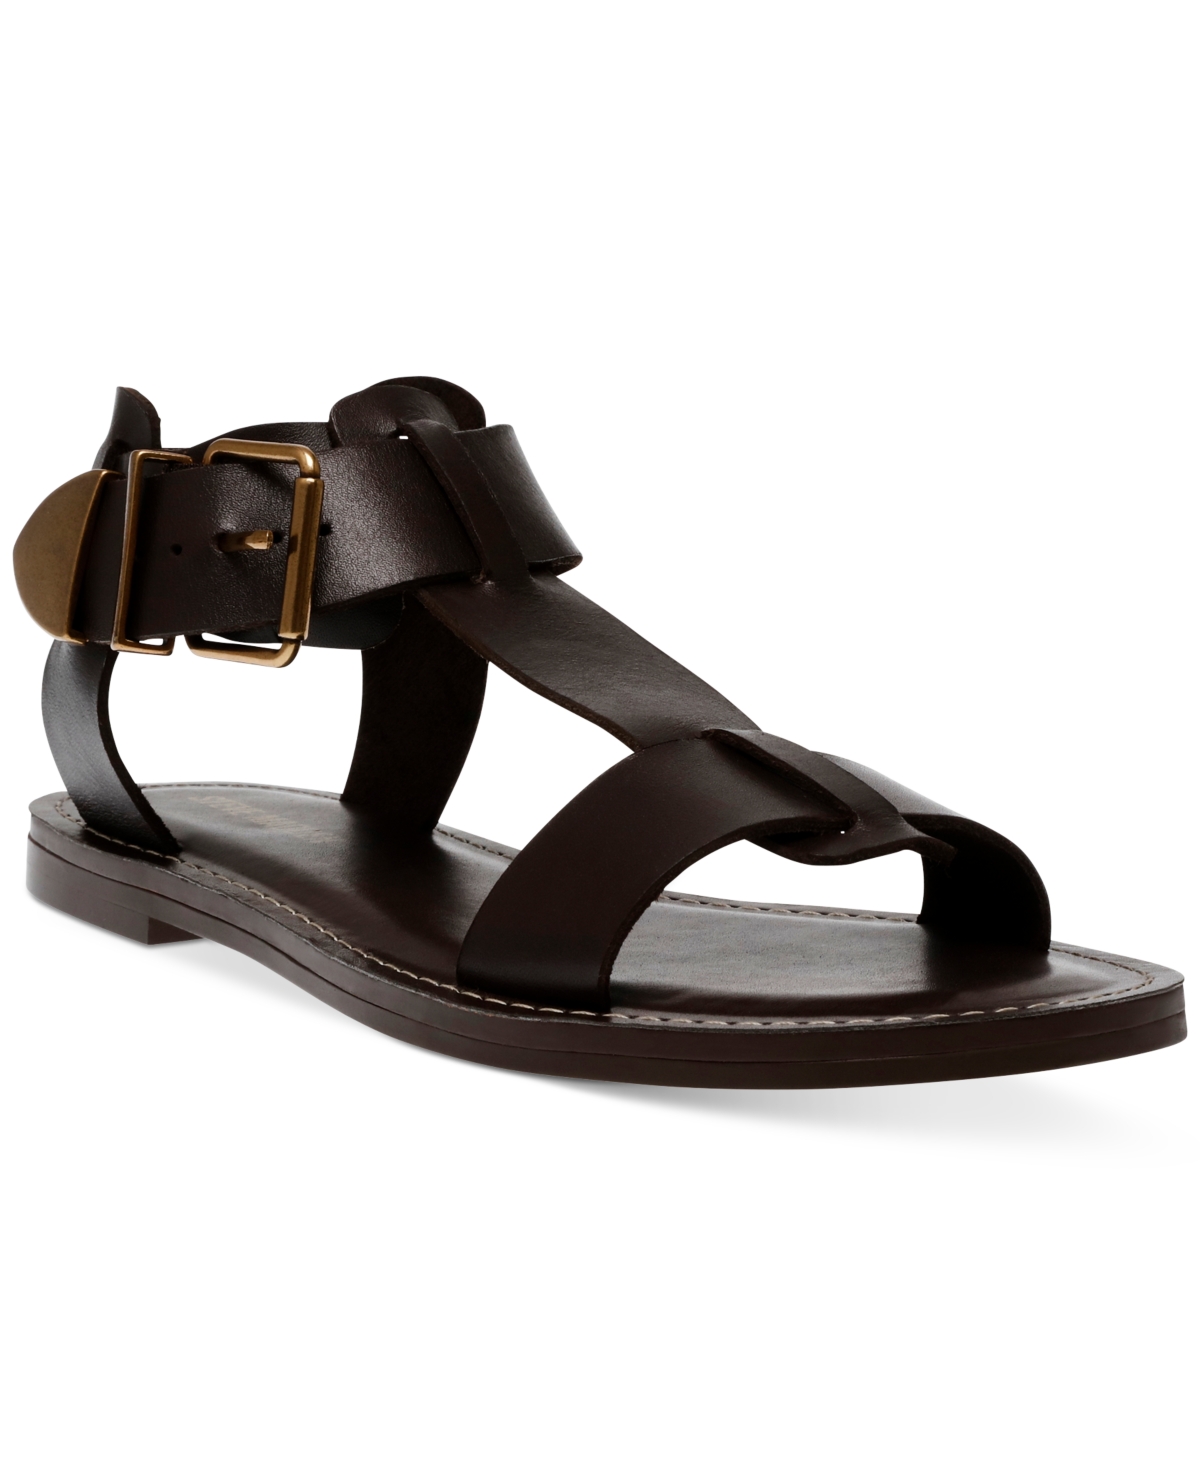 Women's Brazinn Gladiator Flat Sandals - Tan Leather